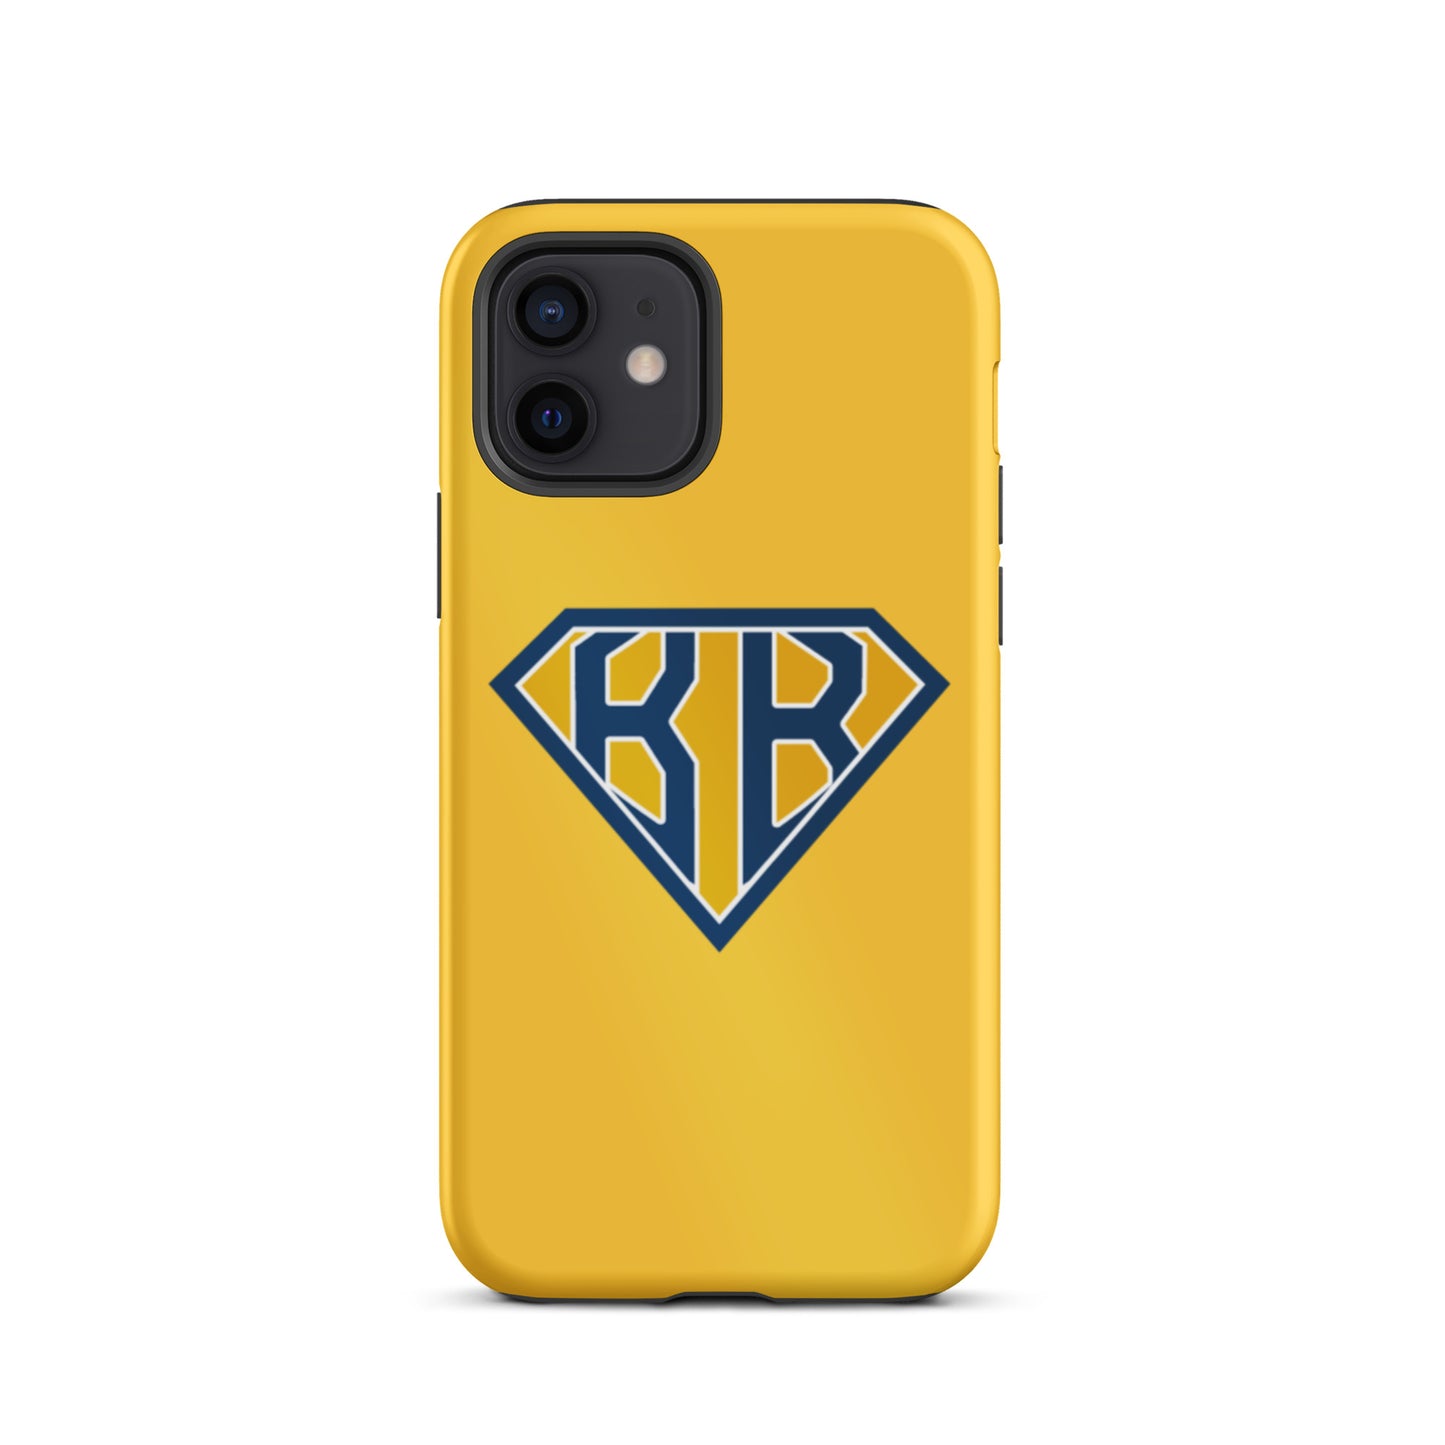 BB Tough iPhone case